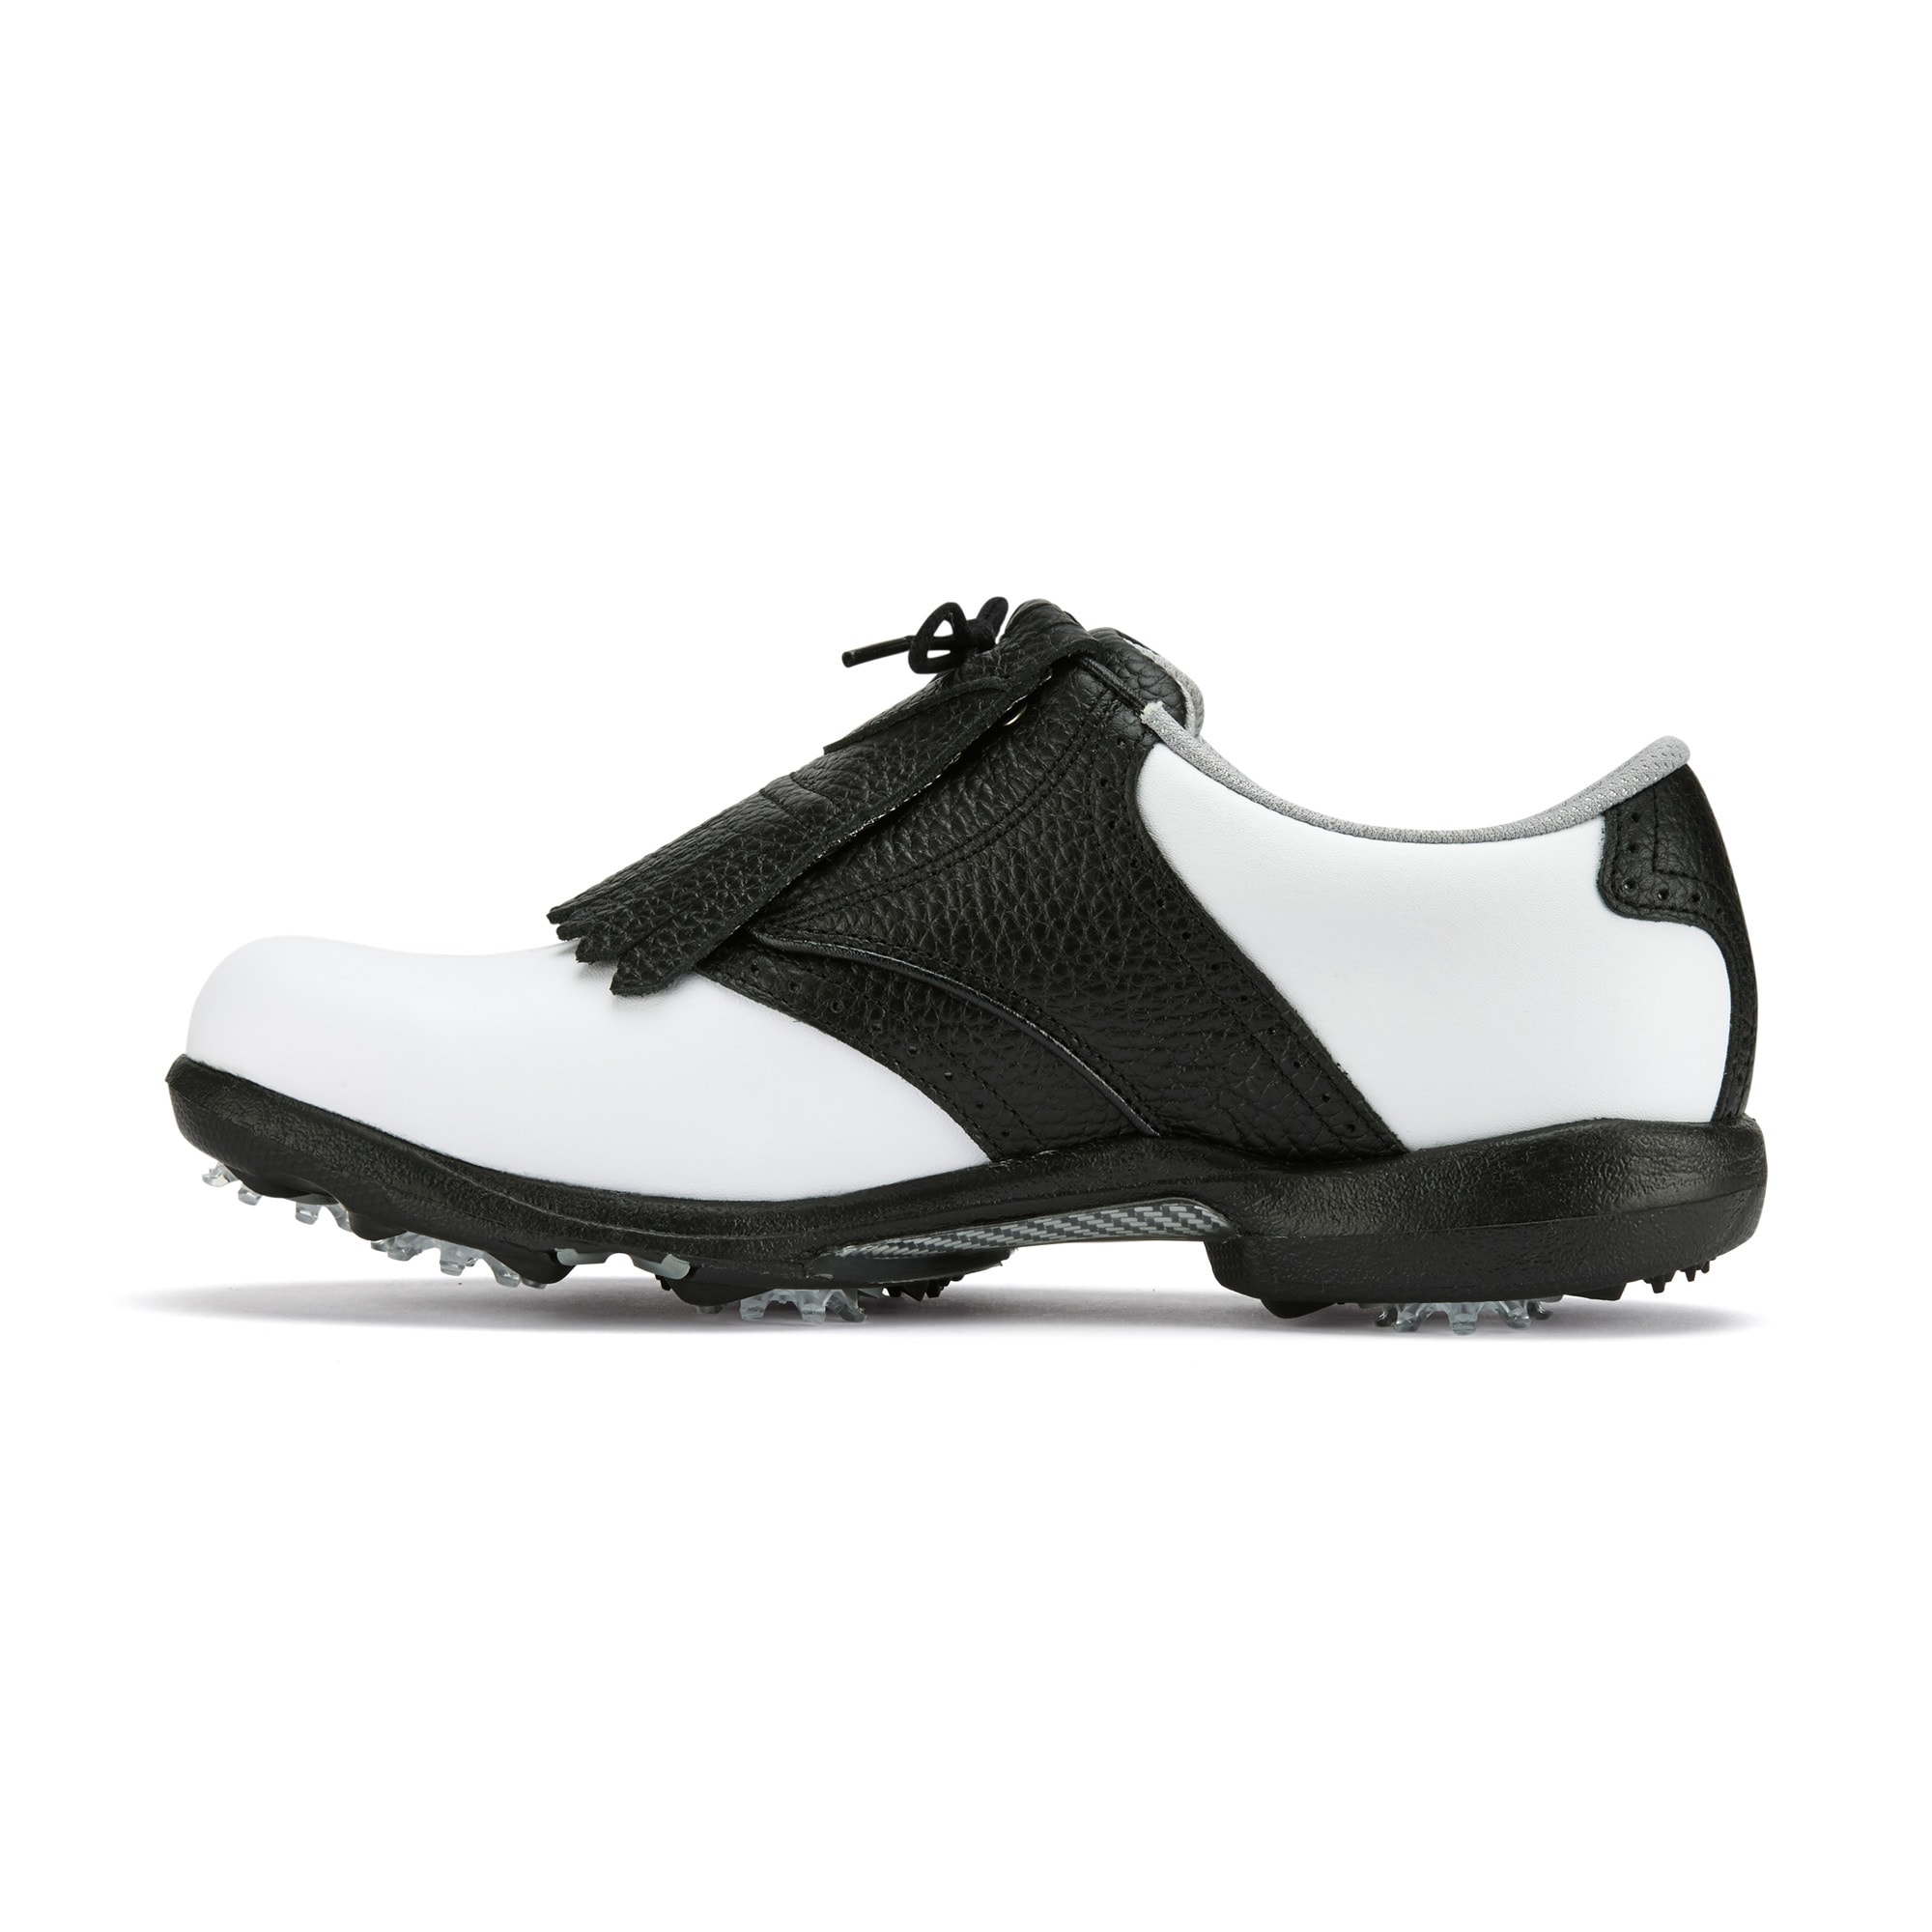 DryJoys - Women's Golf Shoes | FootJoy